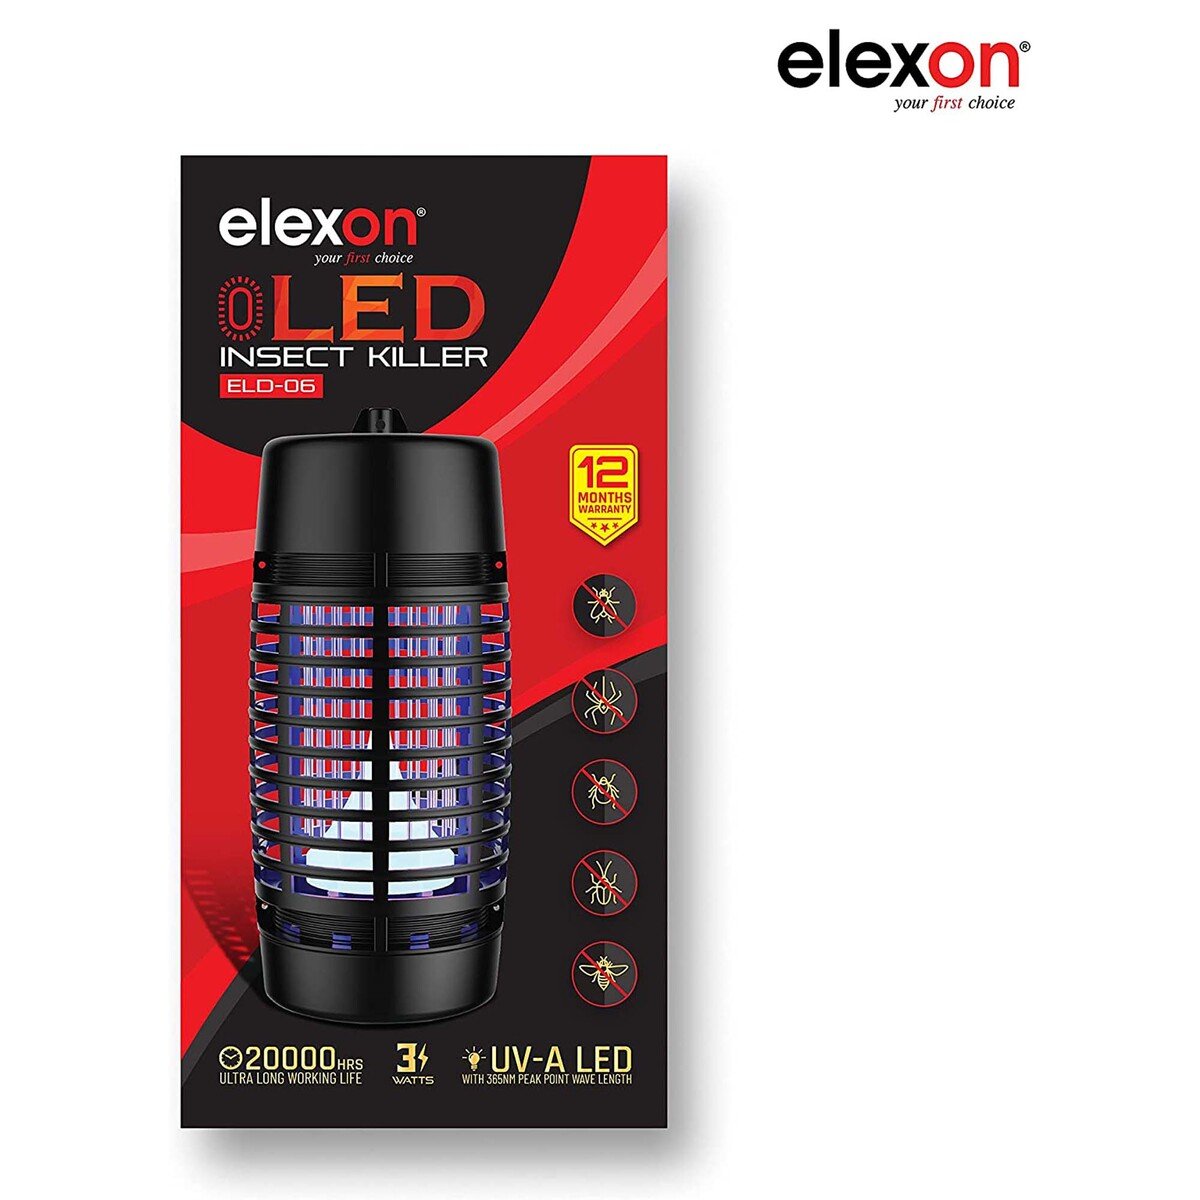 Elexon LED Insect Killer ELD-06 4UV